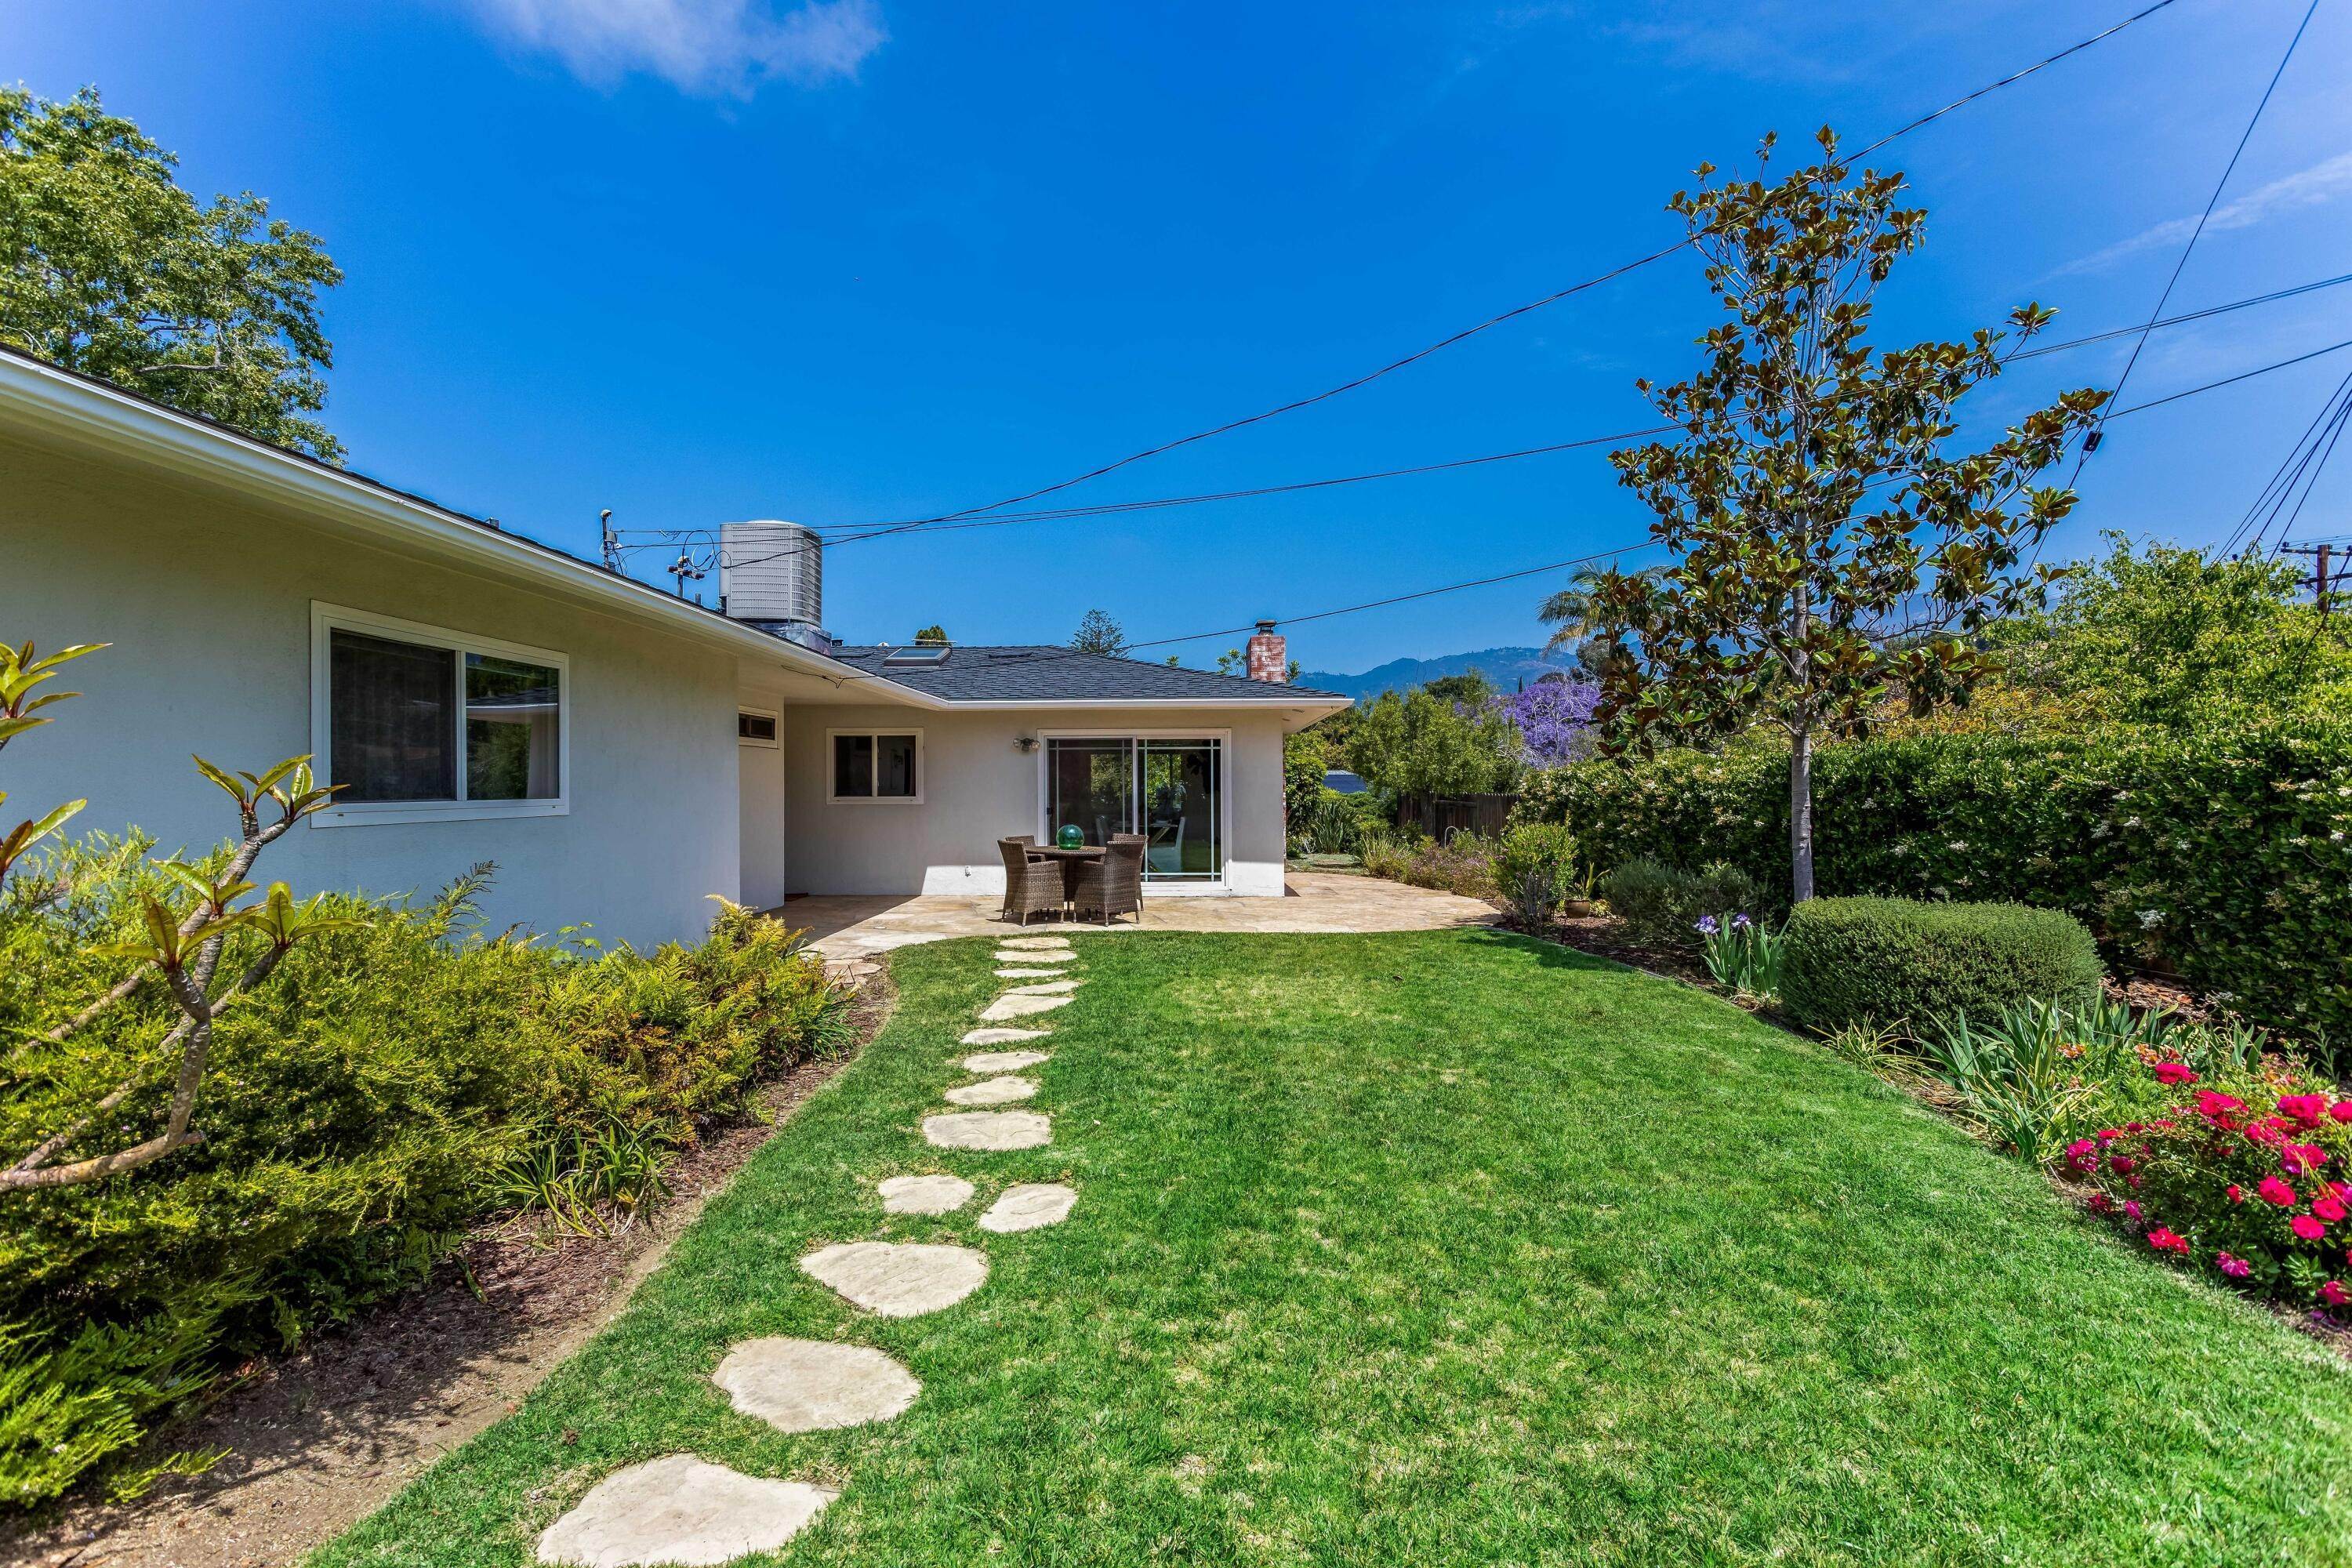 21. Estate for Sale at 4819 La Gama Way Santa Barbara, California 93111 United States